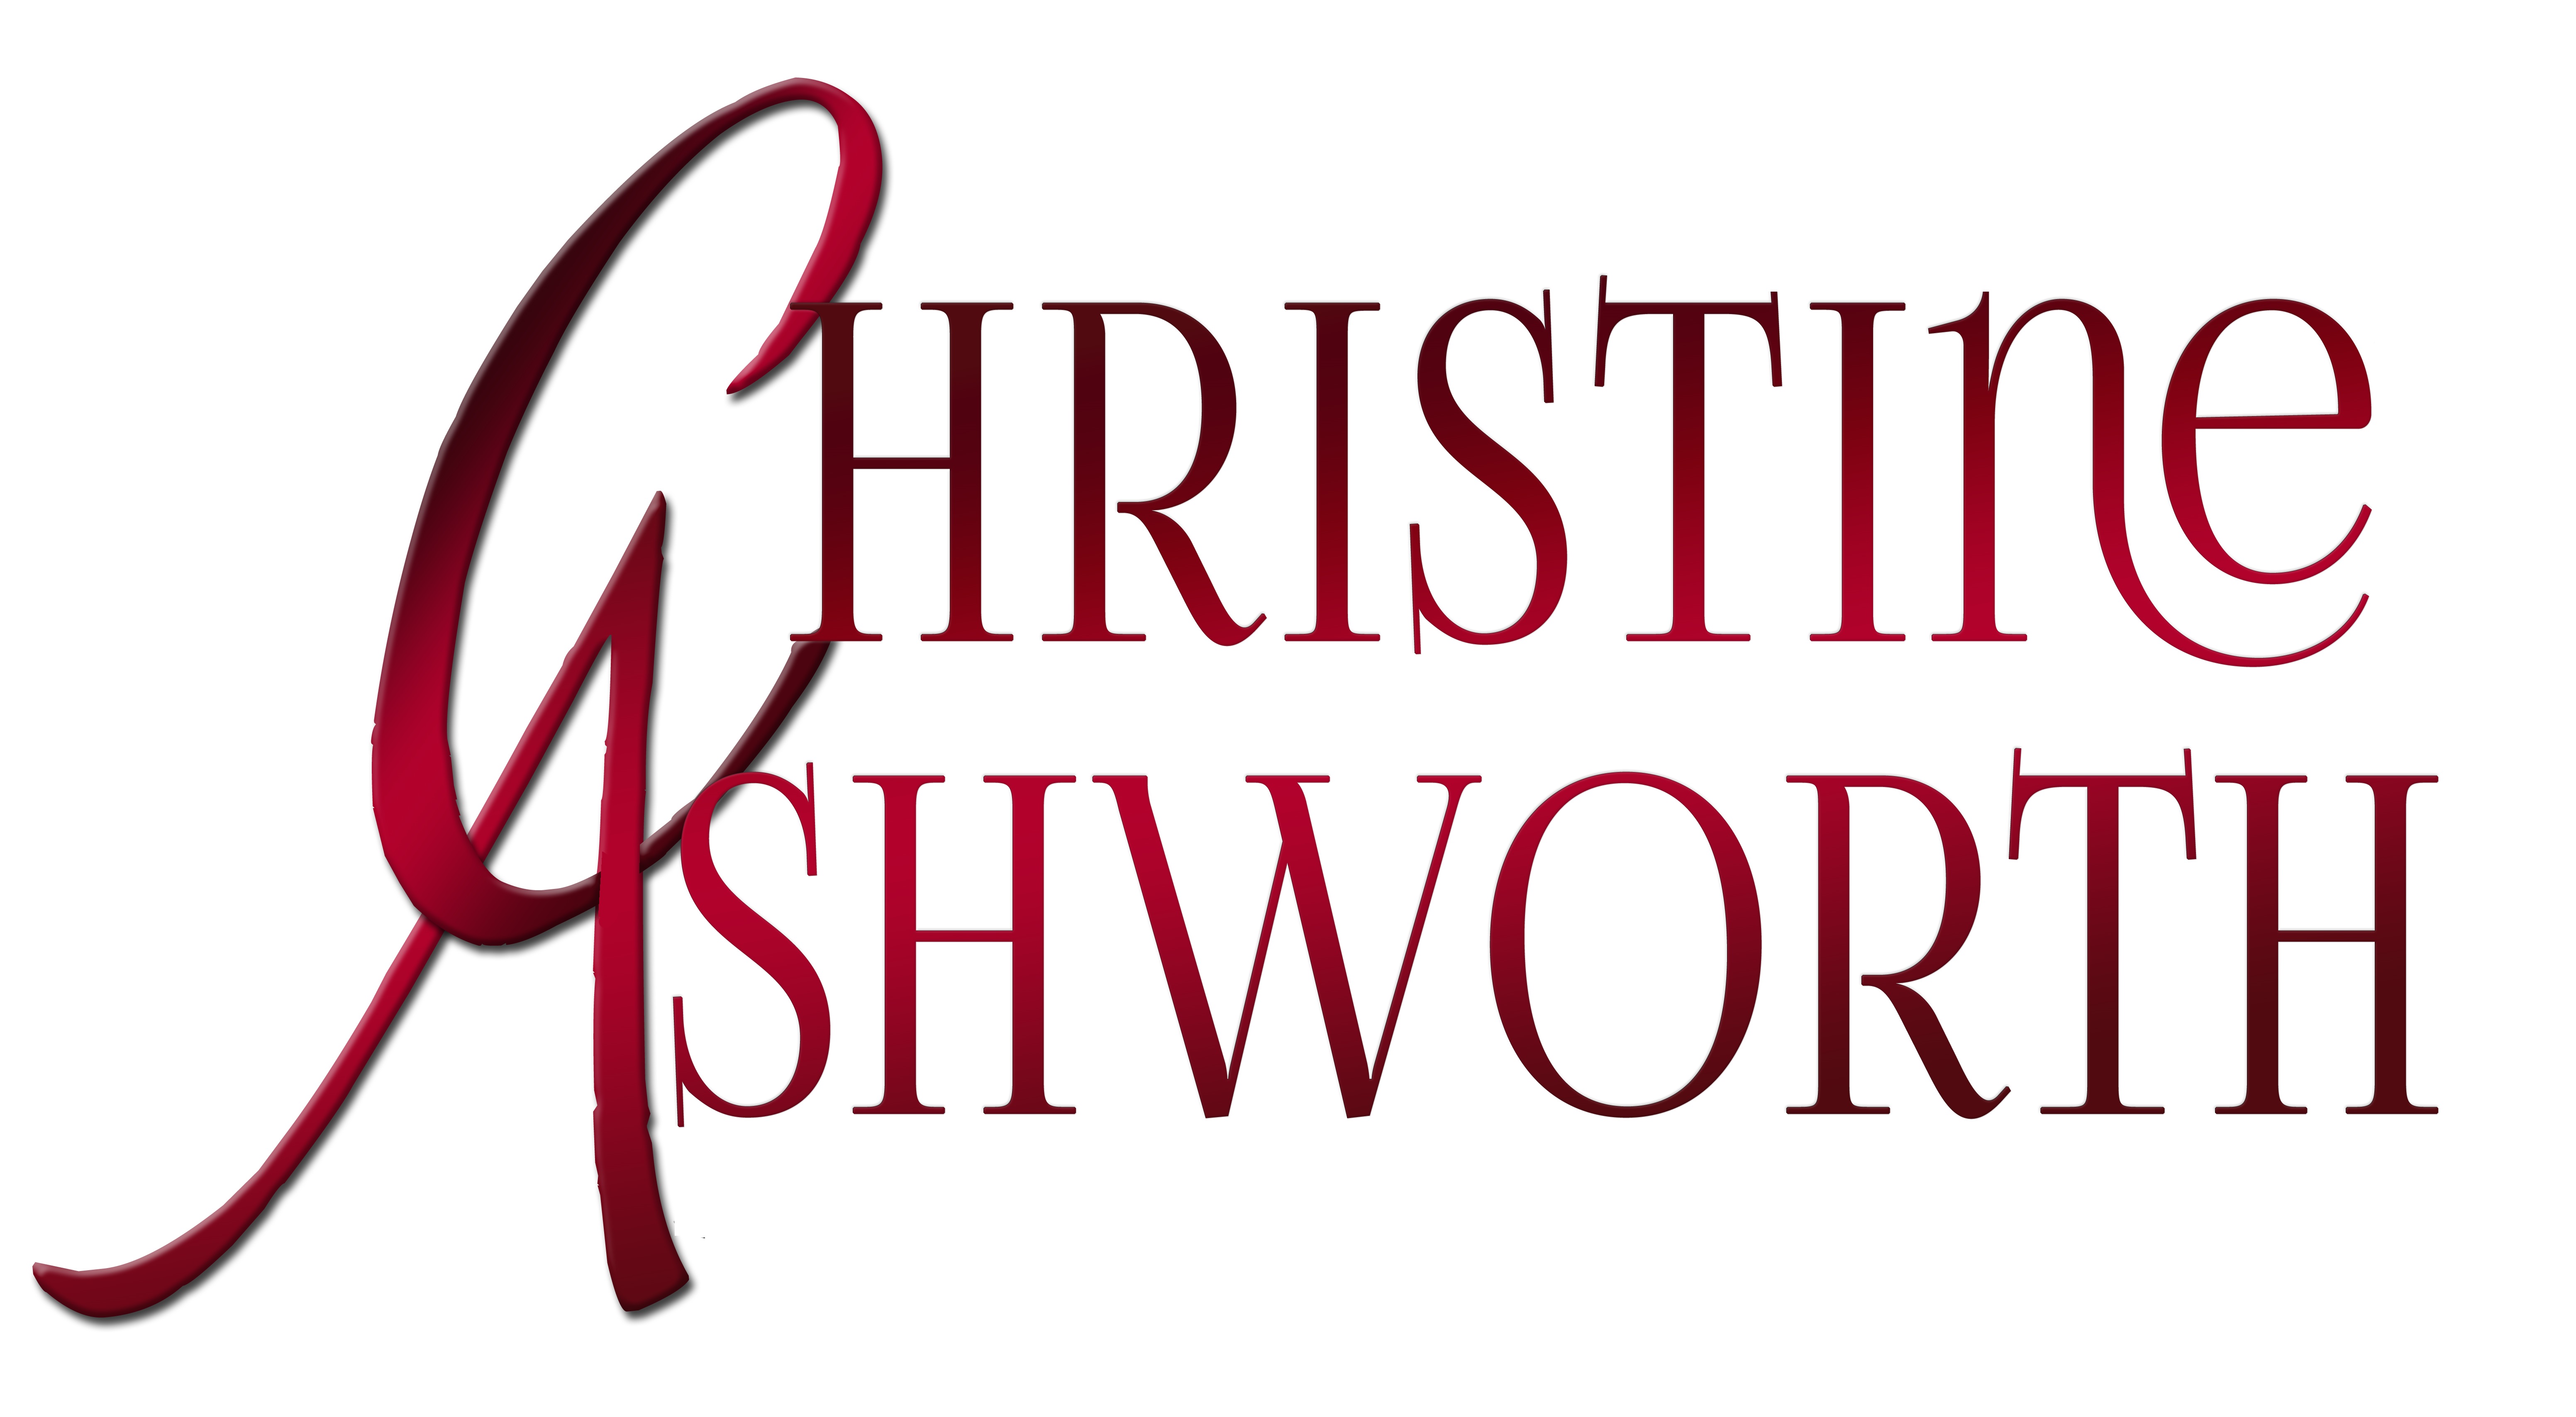 Christine Ashworth